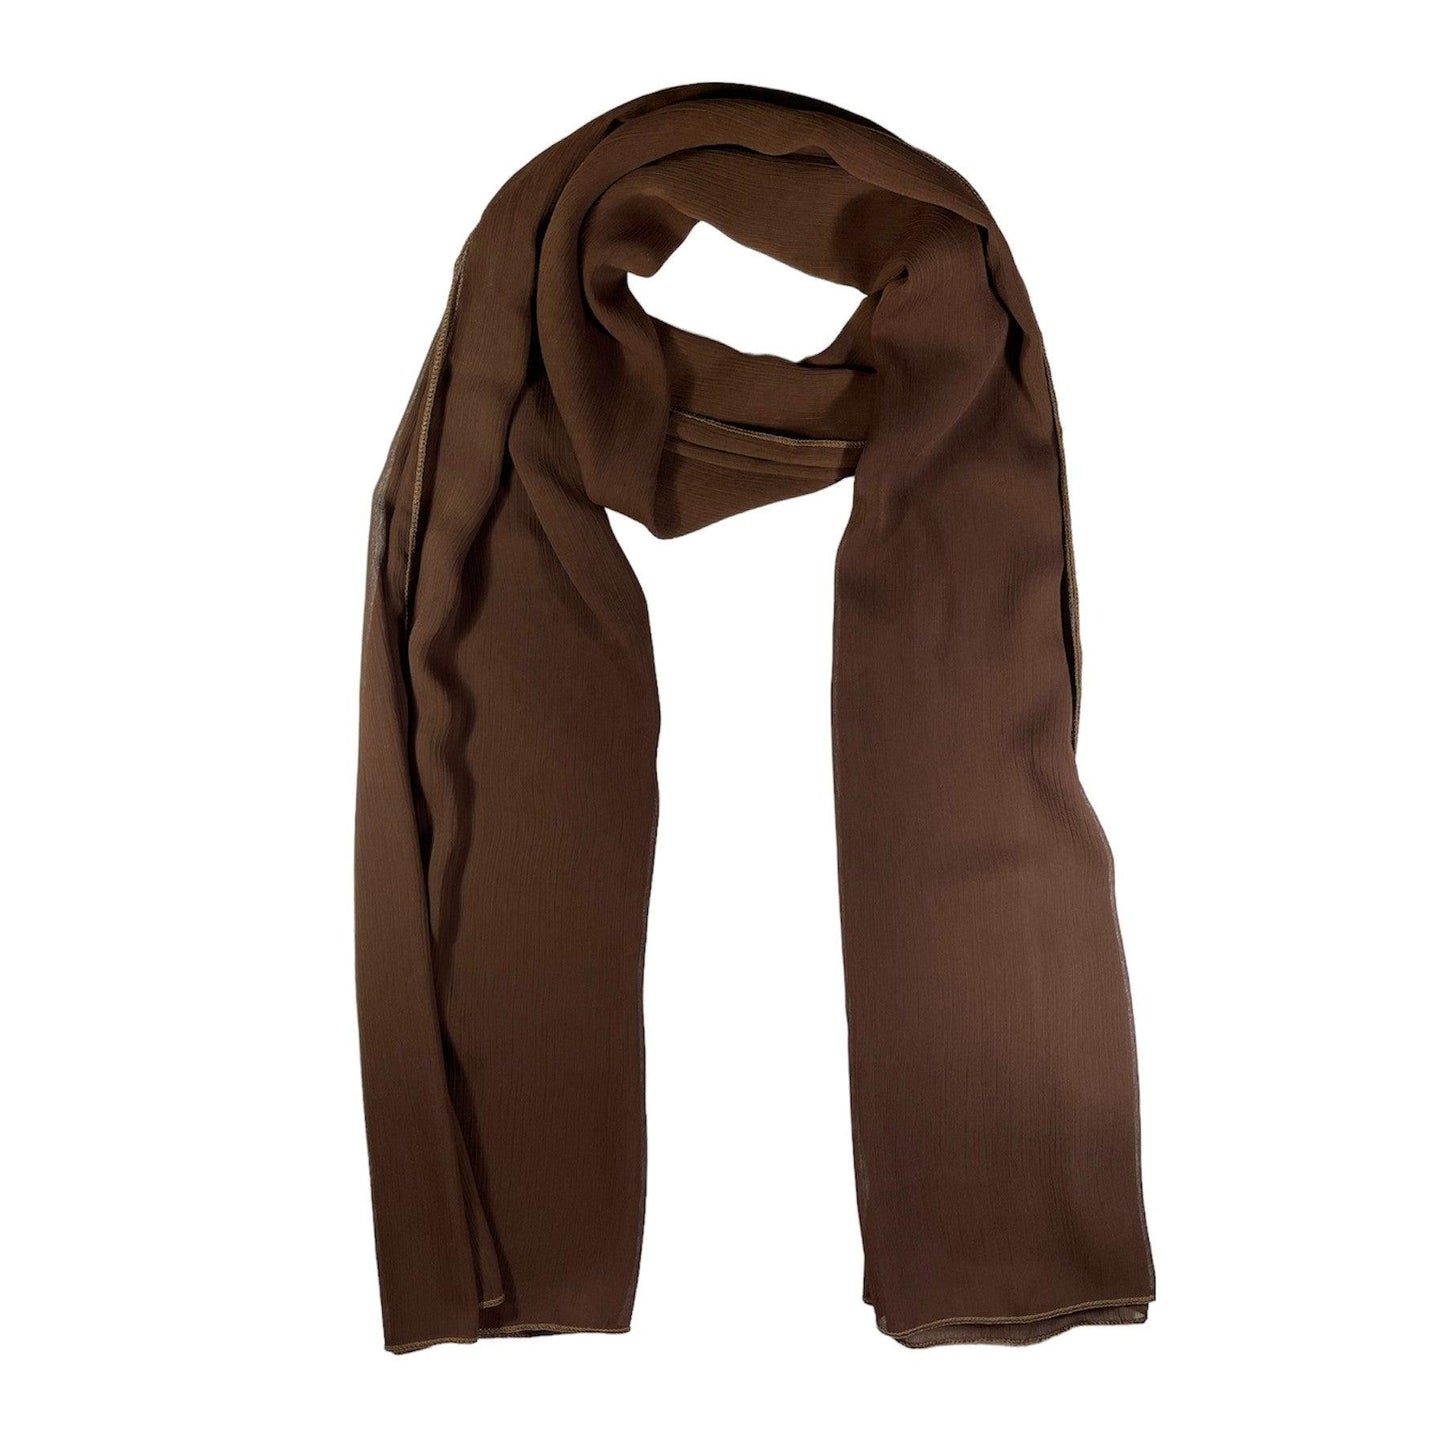 Crepe chiffon scarf 180 x 70 cm by WESTEND CHOICE Scarves & Shawls all scarves, chiffon scarves, crepe chiffon scarves, women